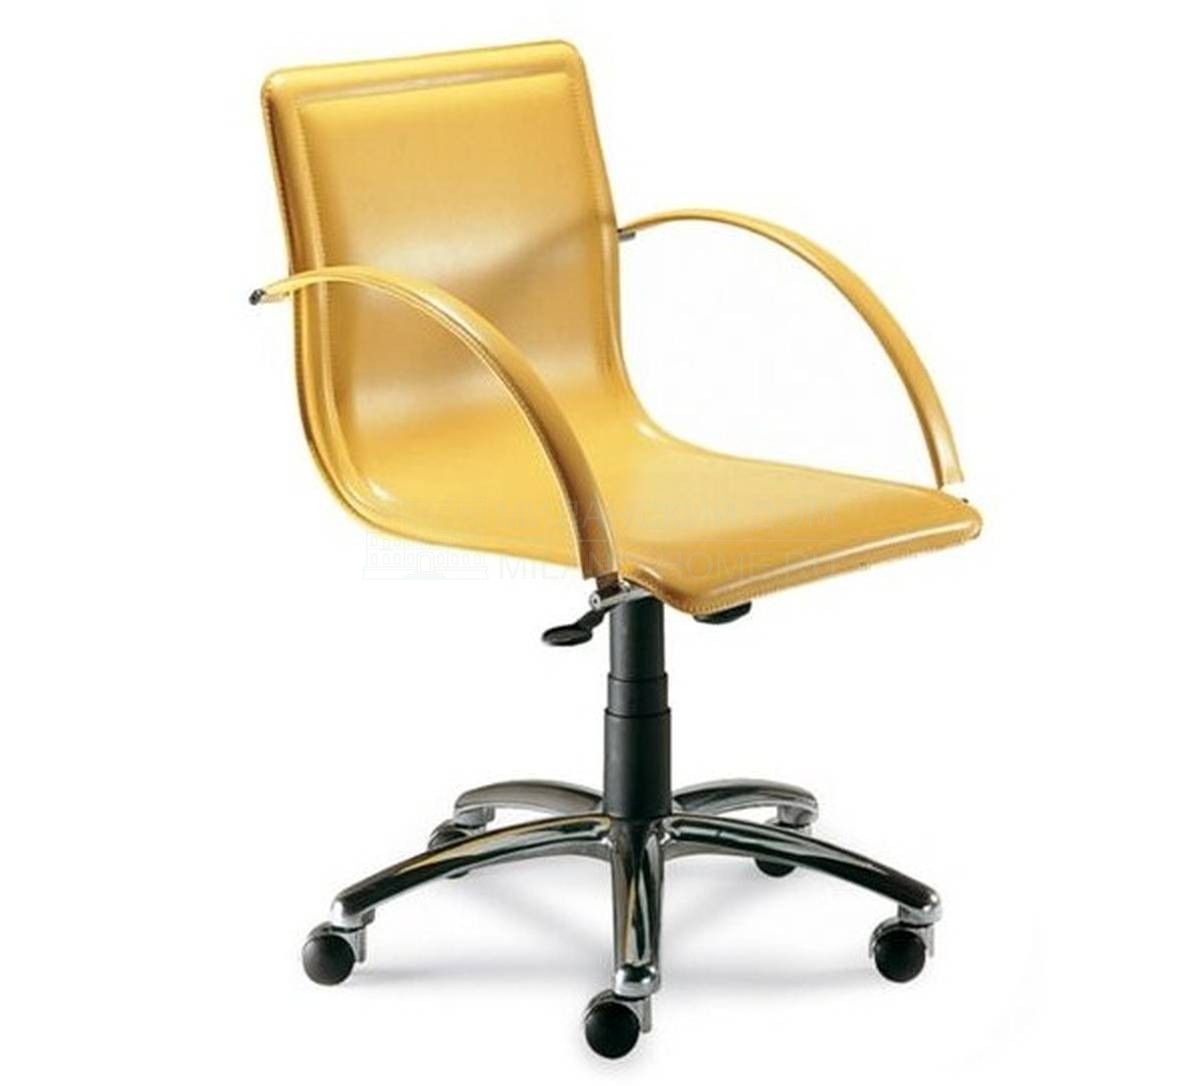 Кожаное кресло Ibiza desk armchair из Франции фабрики ROCHE BOBOIS